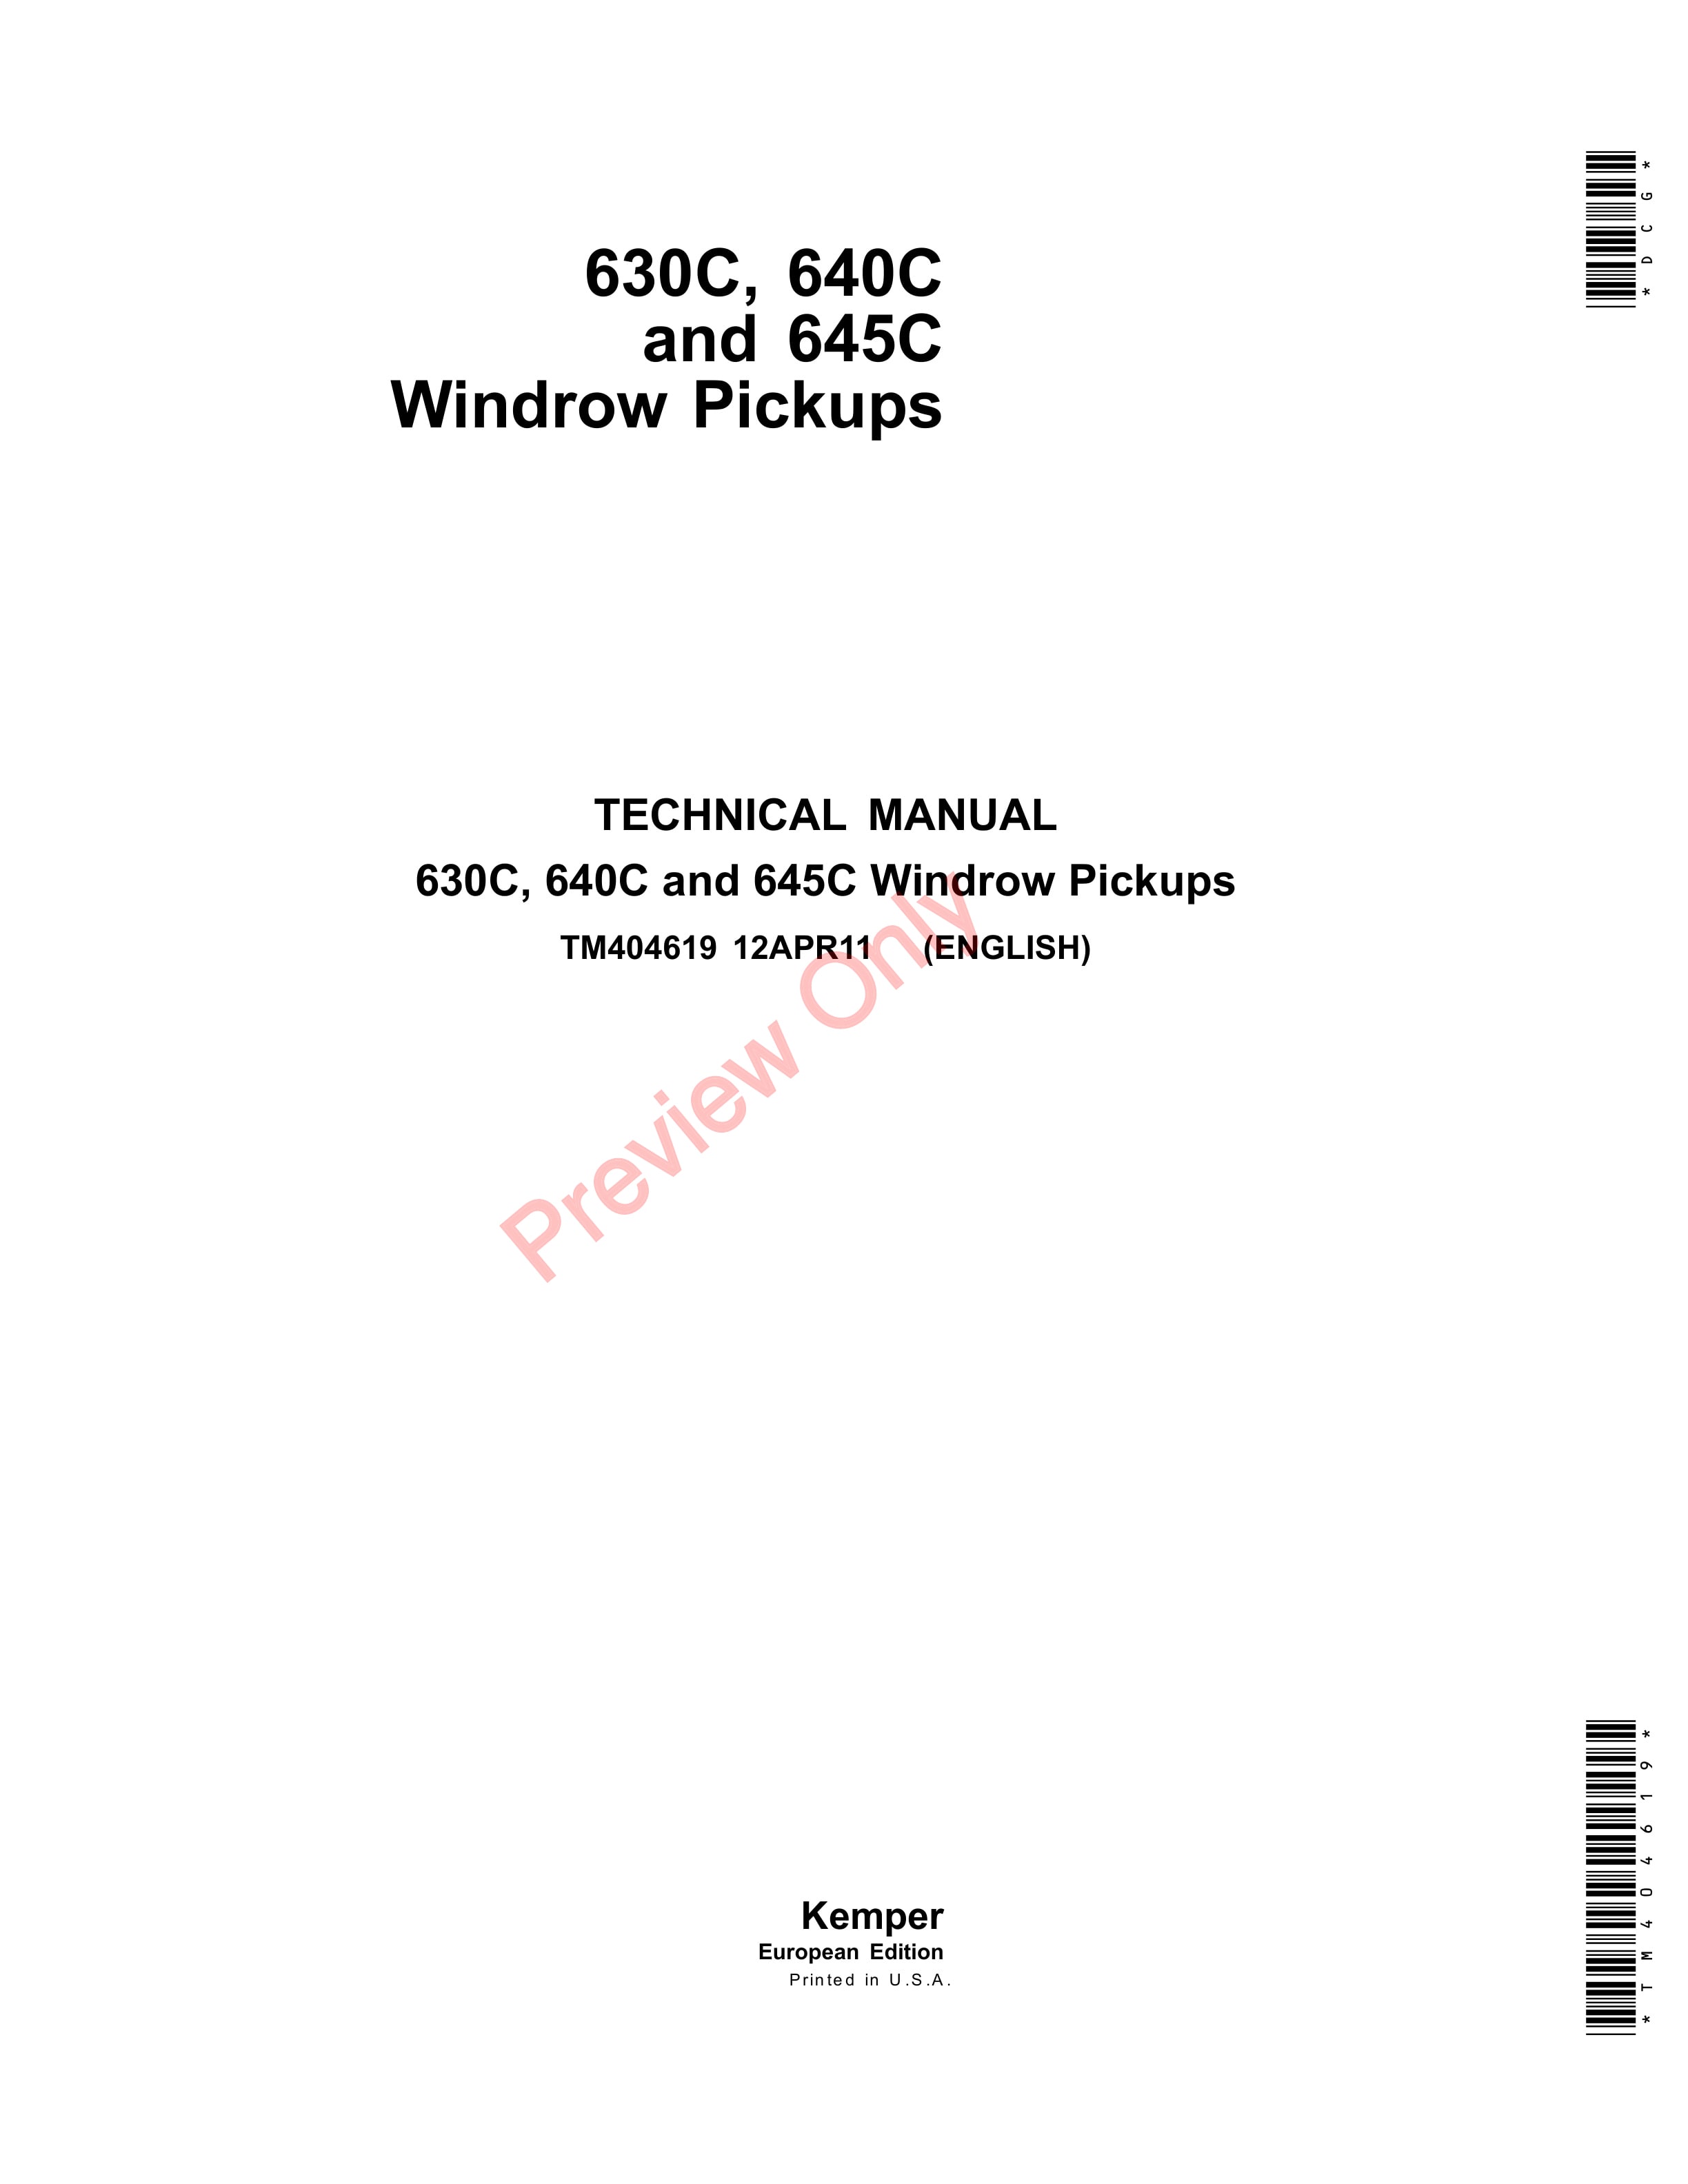 John Deere 630C 640C and 645C Windrow Pickups Technical Manual TM404619 12APR11 1